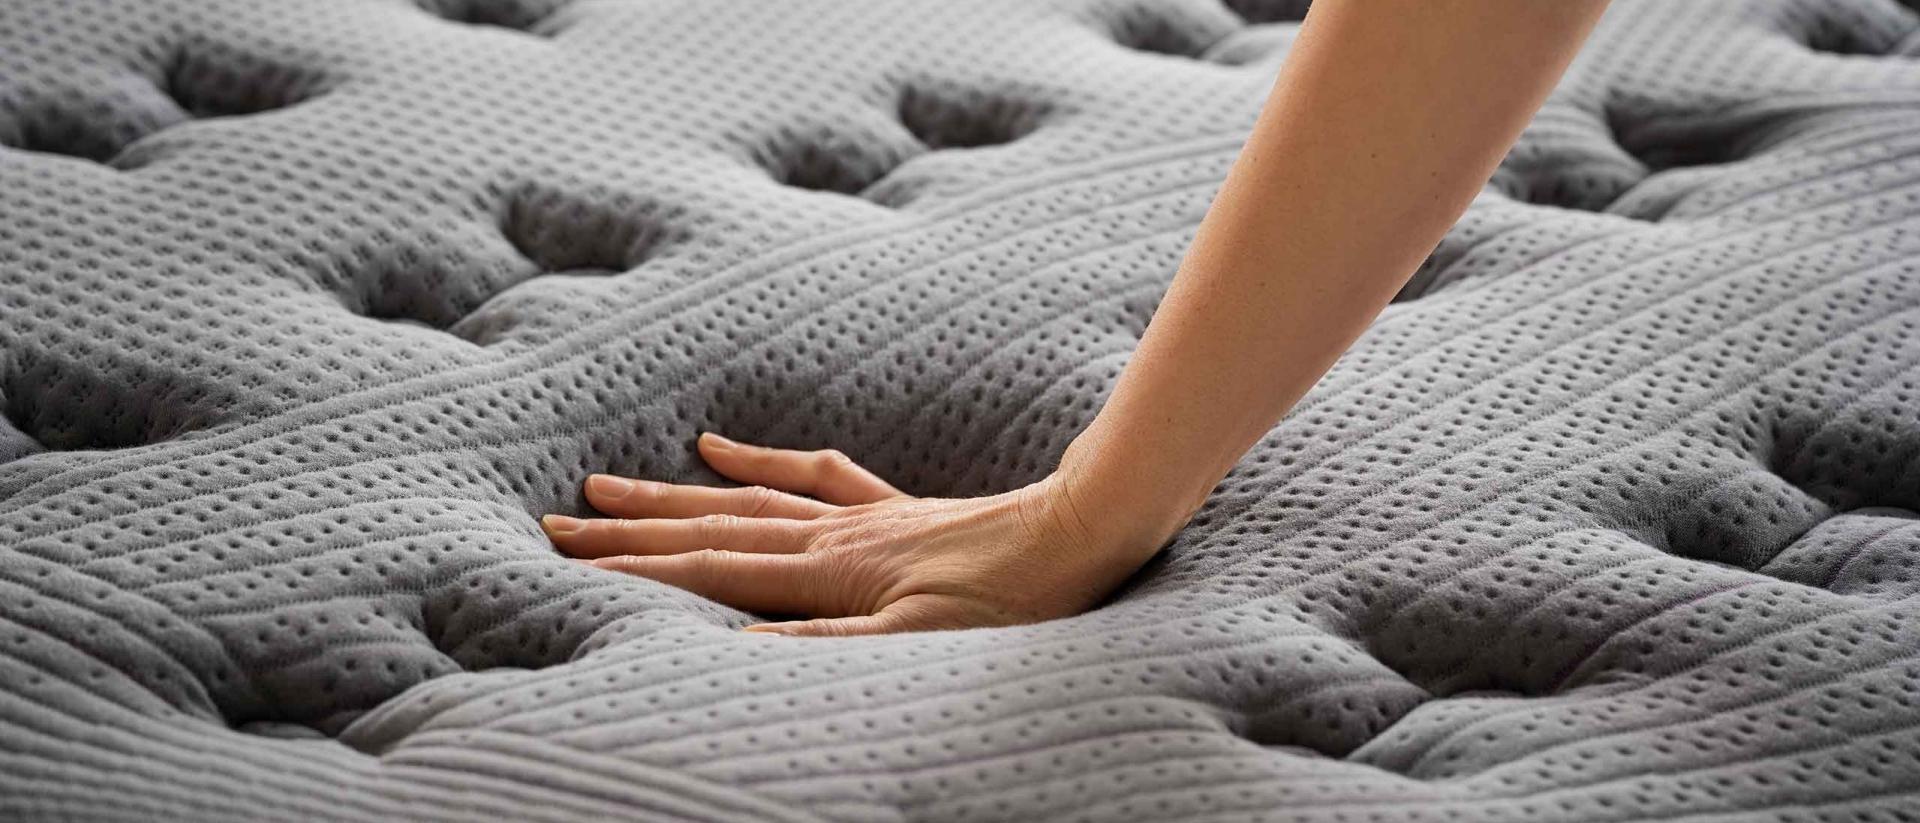 Hand pushing down on a grey Purple Rejuvenate latex mattress.